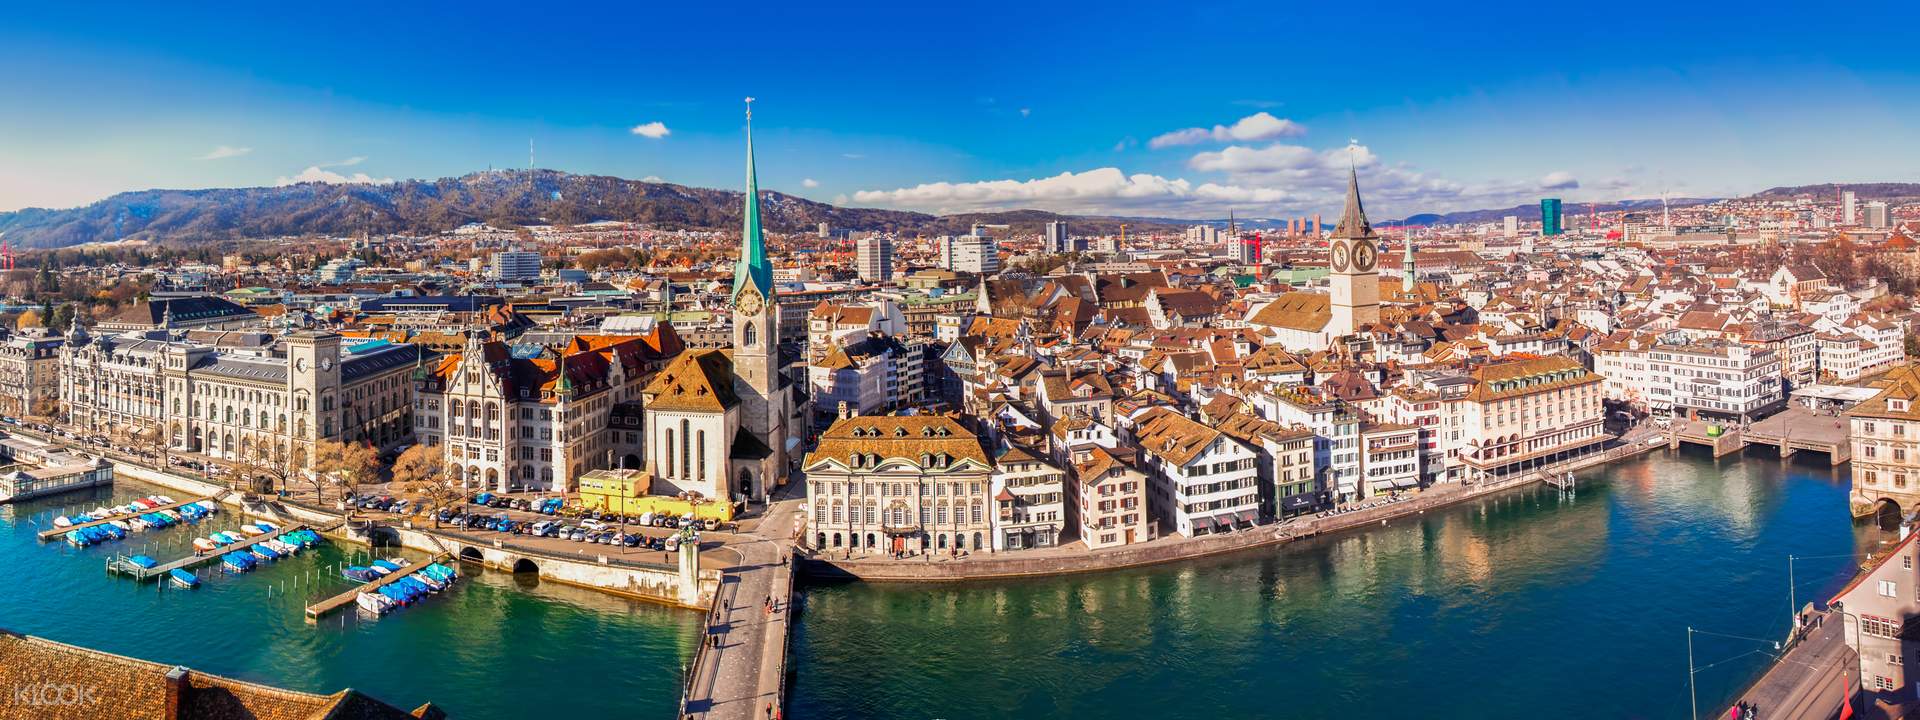 Wisata berkeliling kota kota Zurich dengan Feri dan kereta gantung- Klook